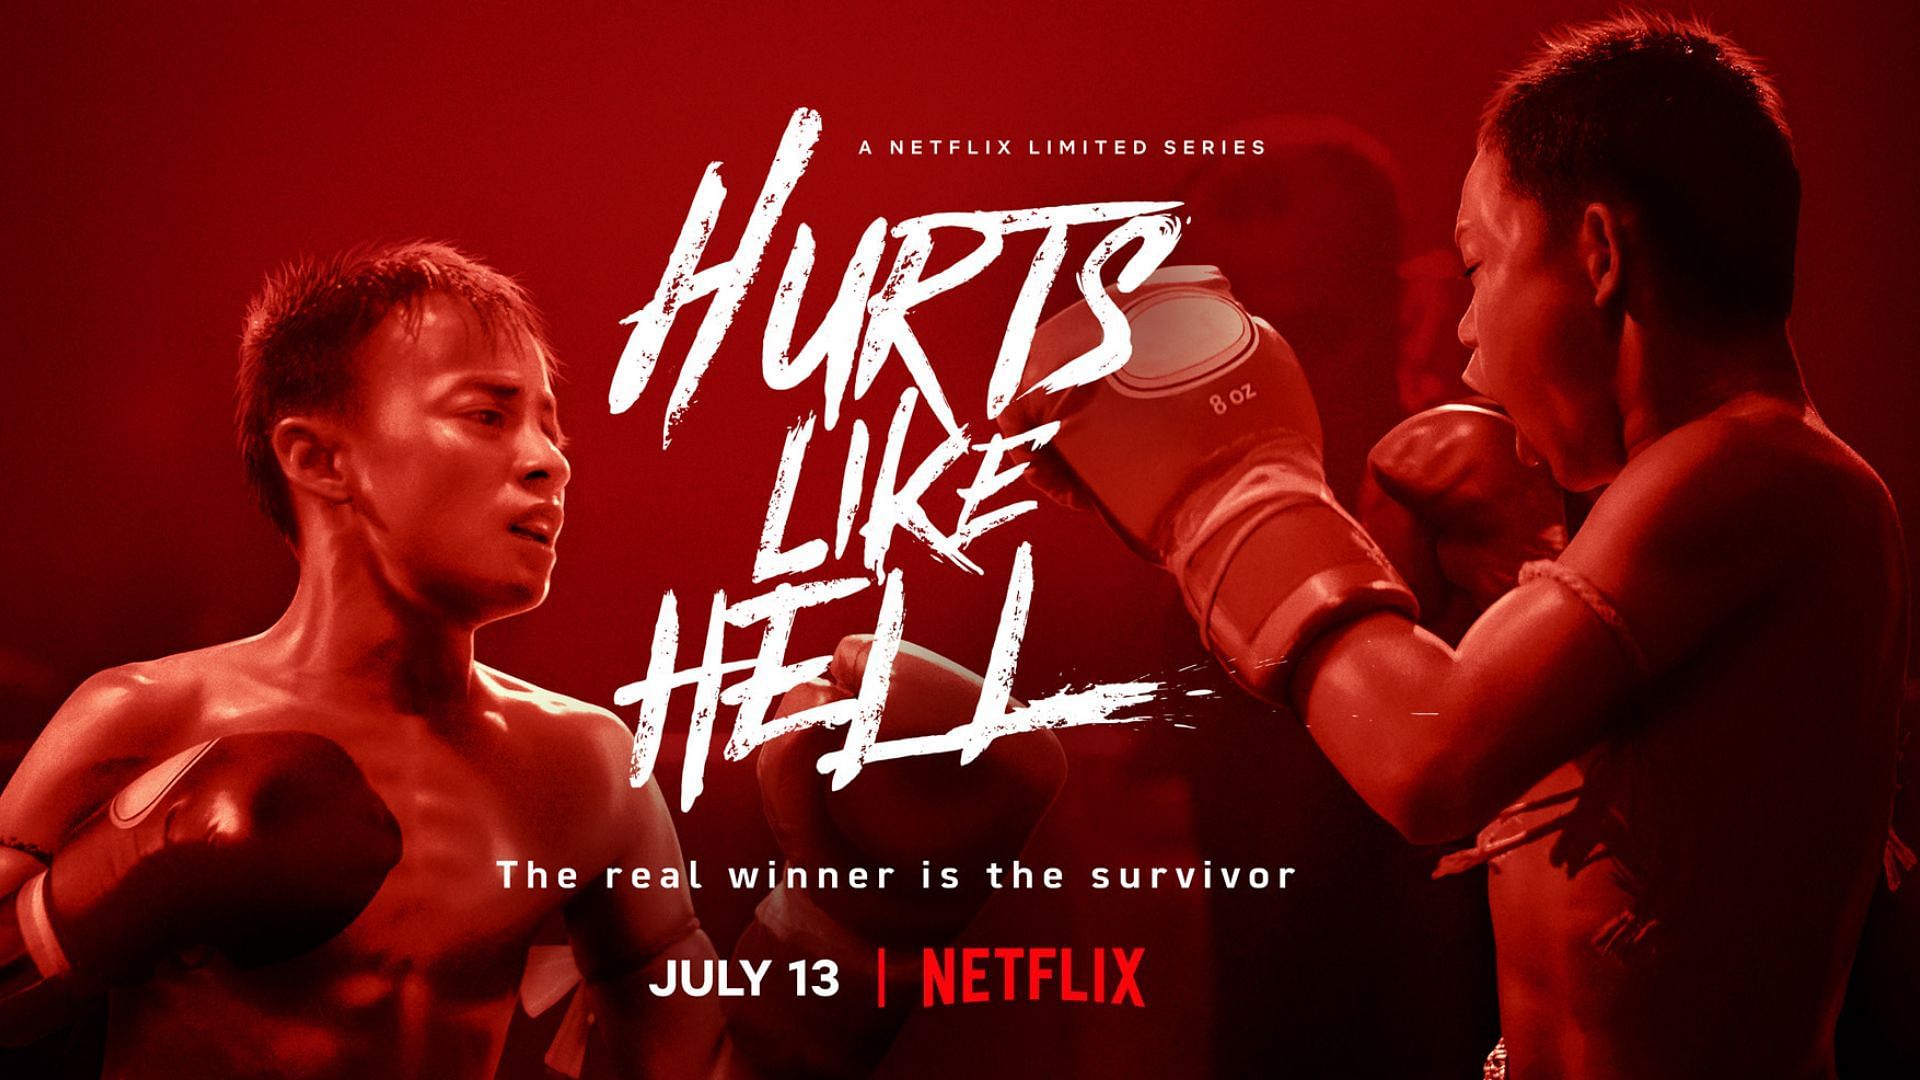 The official poster for Hurts Like Hell (Image via IMDb)